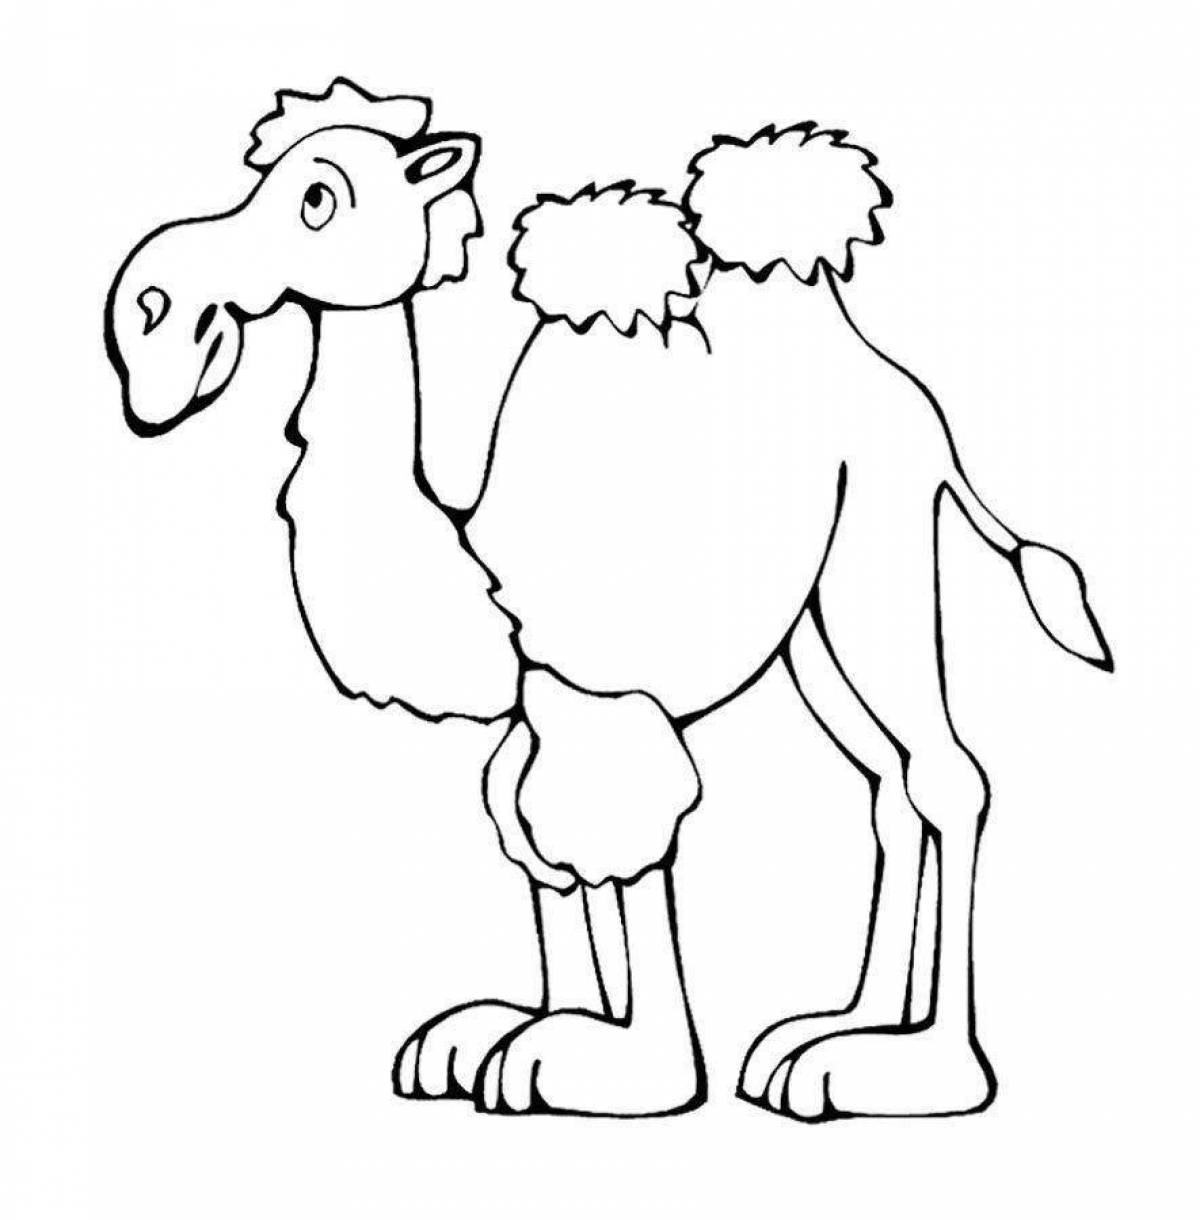 Coloring book joyful camel for kids